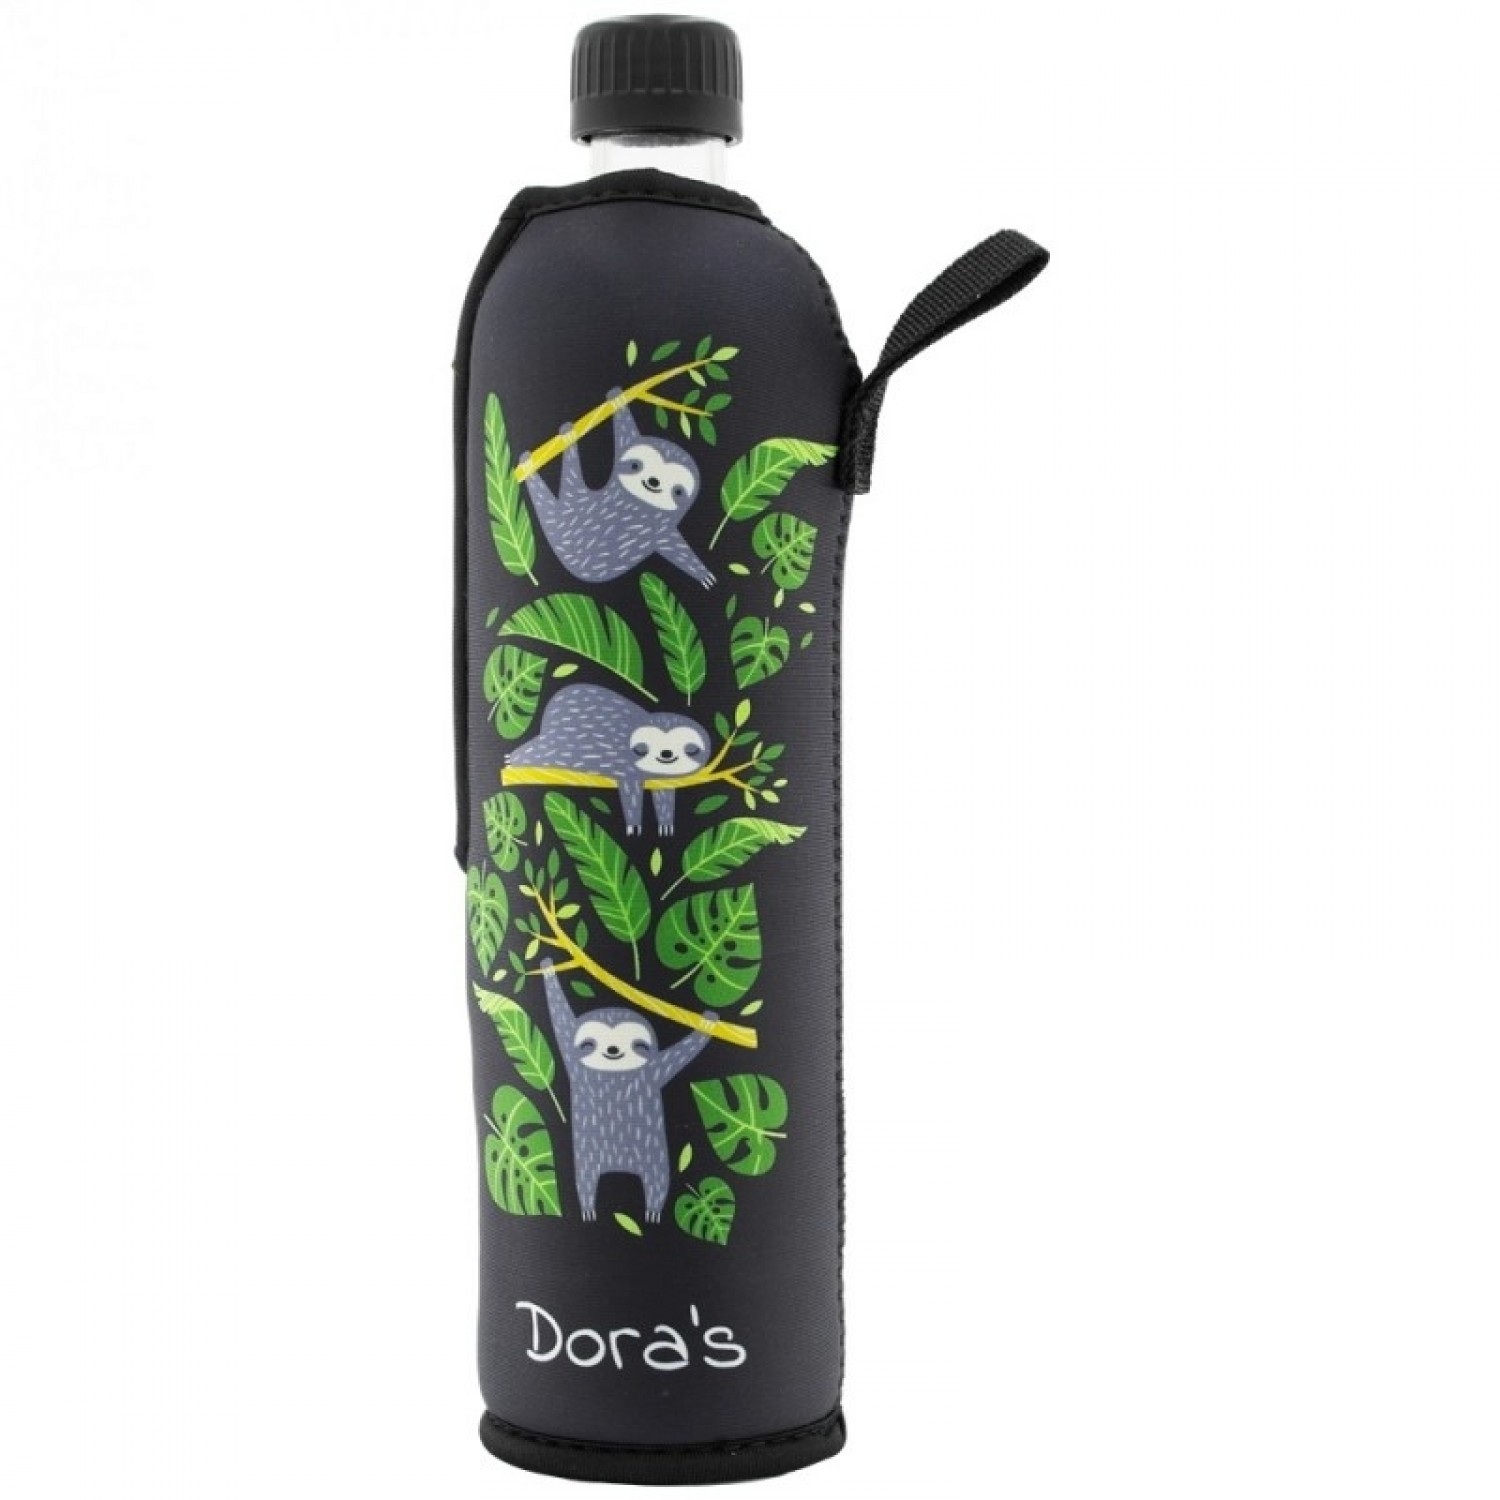 Sloth CHILLAX neoprene sleeve with Dora’s glass bottle